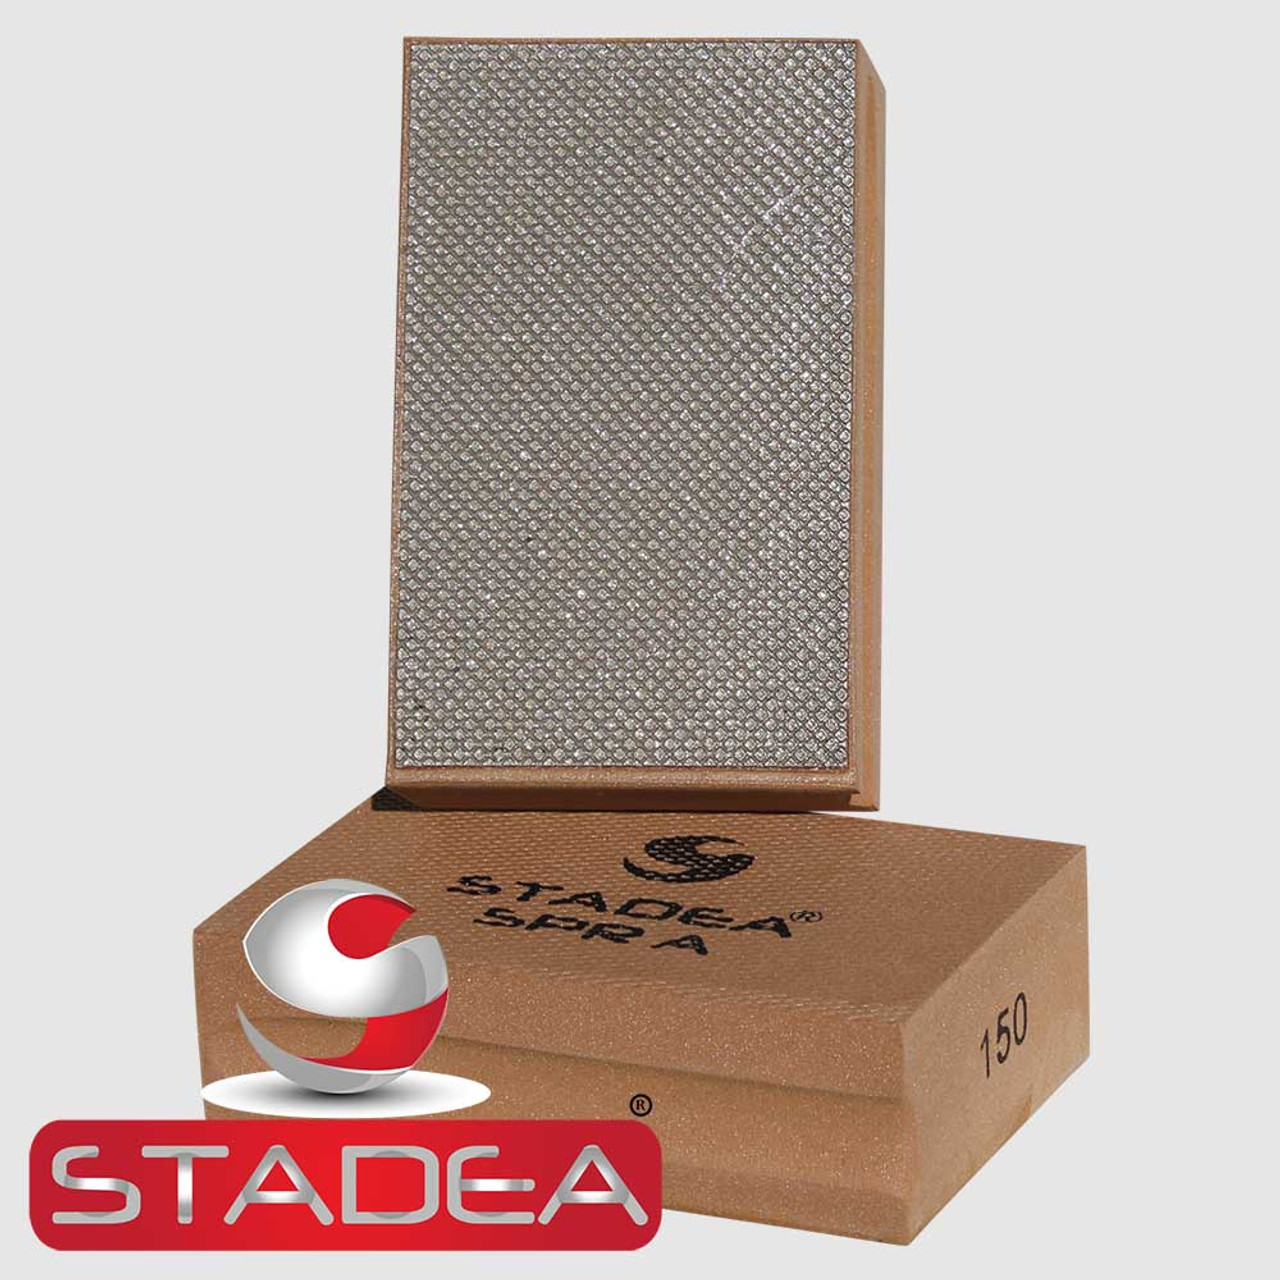 Stadea Diamond Hand Polishing Pads For Stone Glass Concrete Granite Marble  Hand Polishing, Grit 150 Series Super A